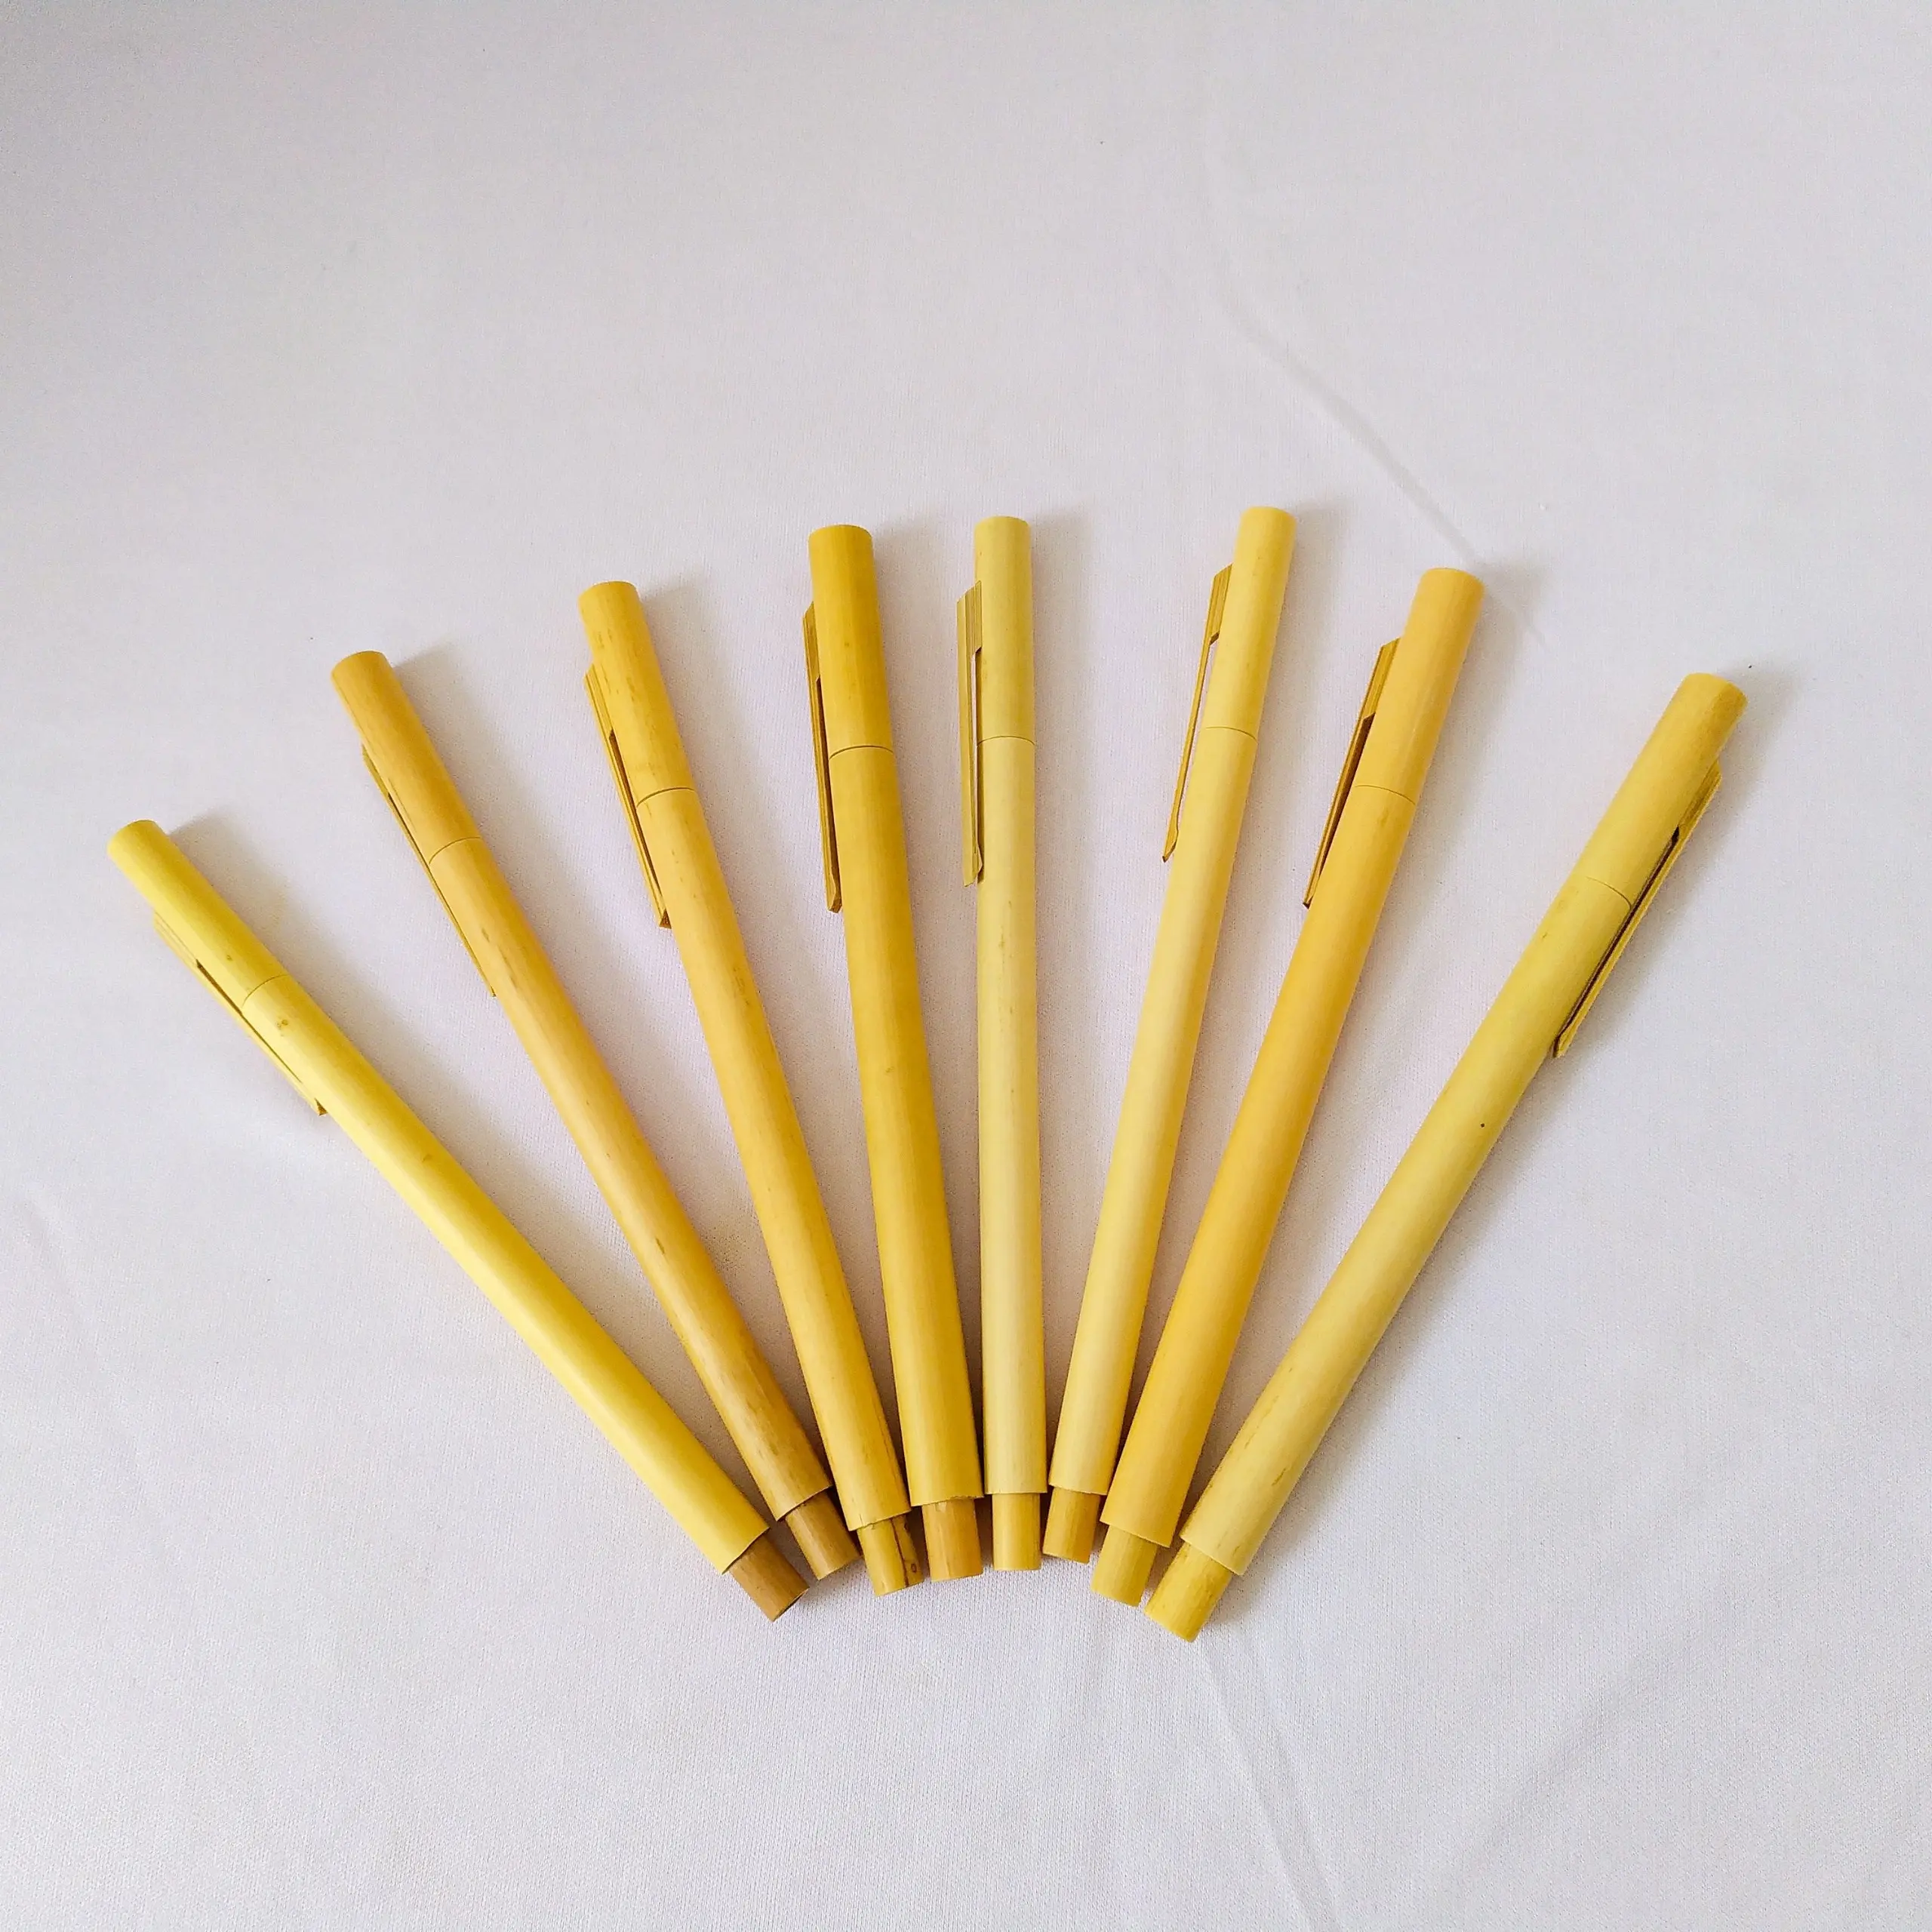 Natural eco friendly bamboo ballpoint pen - Reliabo Promotional Bamboo Barrel Writing Ballpoint Pen